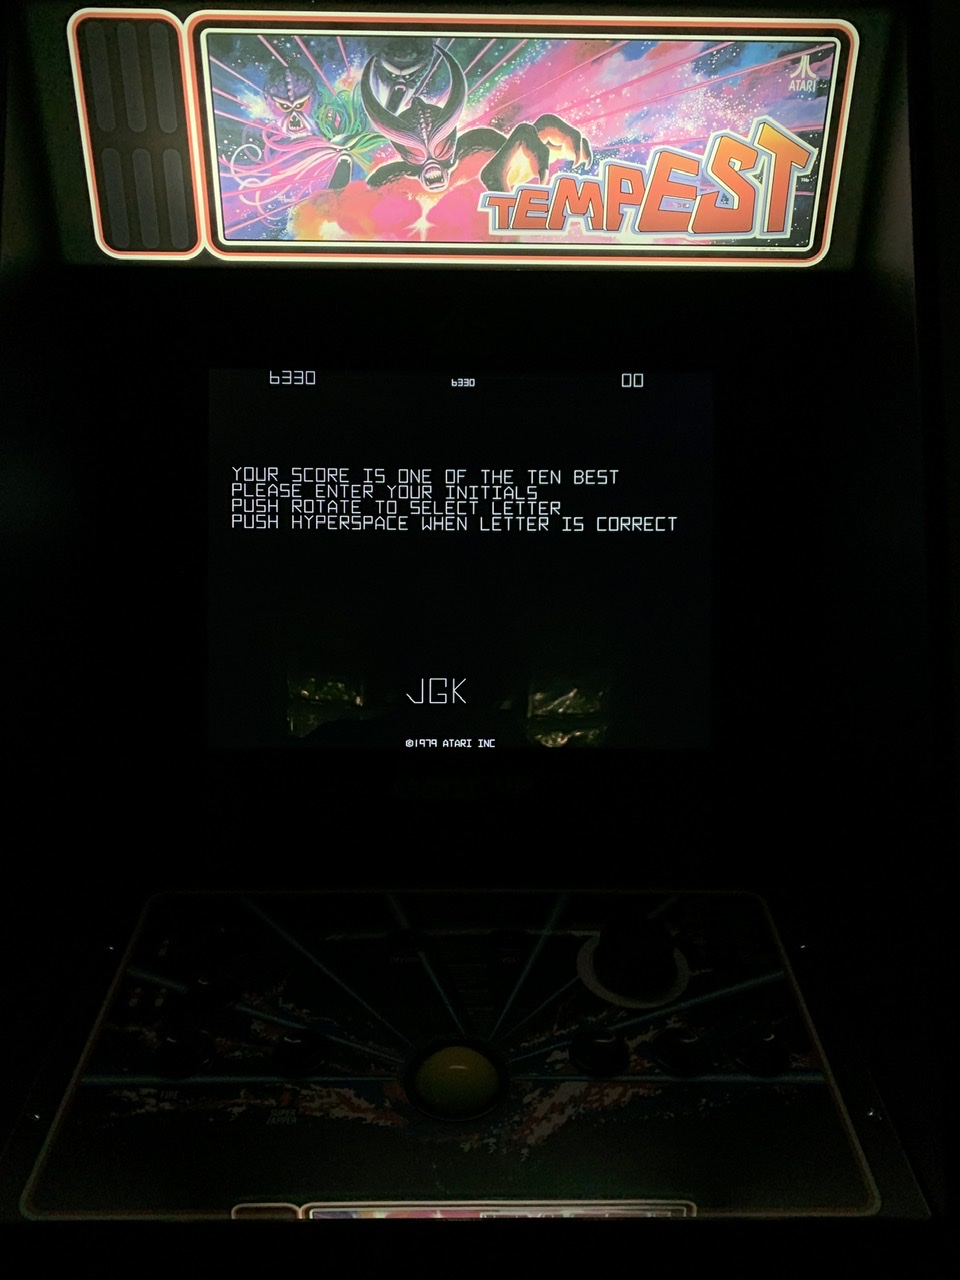 jgkspsx: Asteroids (Arcade Emulated / M.A.M.E.) 6,330 points on 2022-06-19 12:58:07